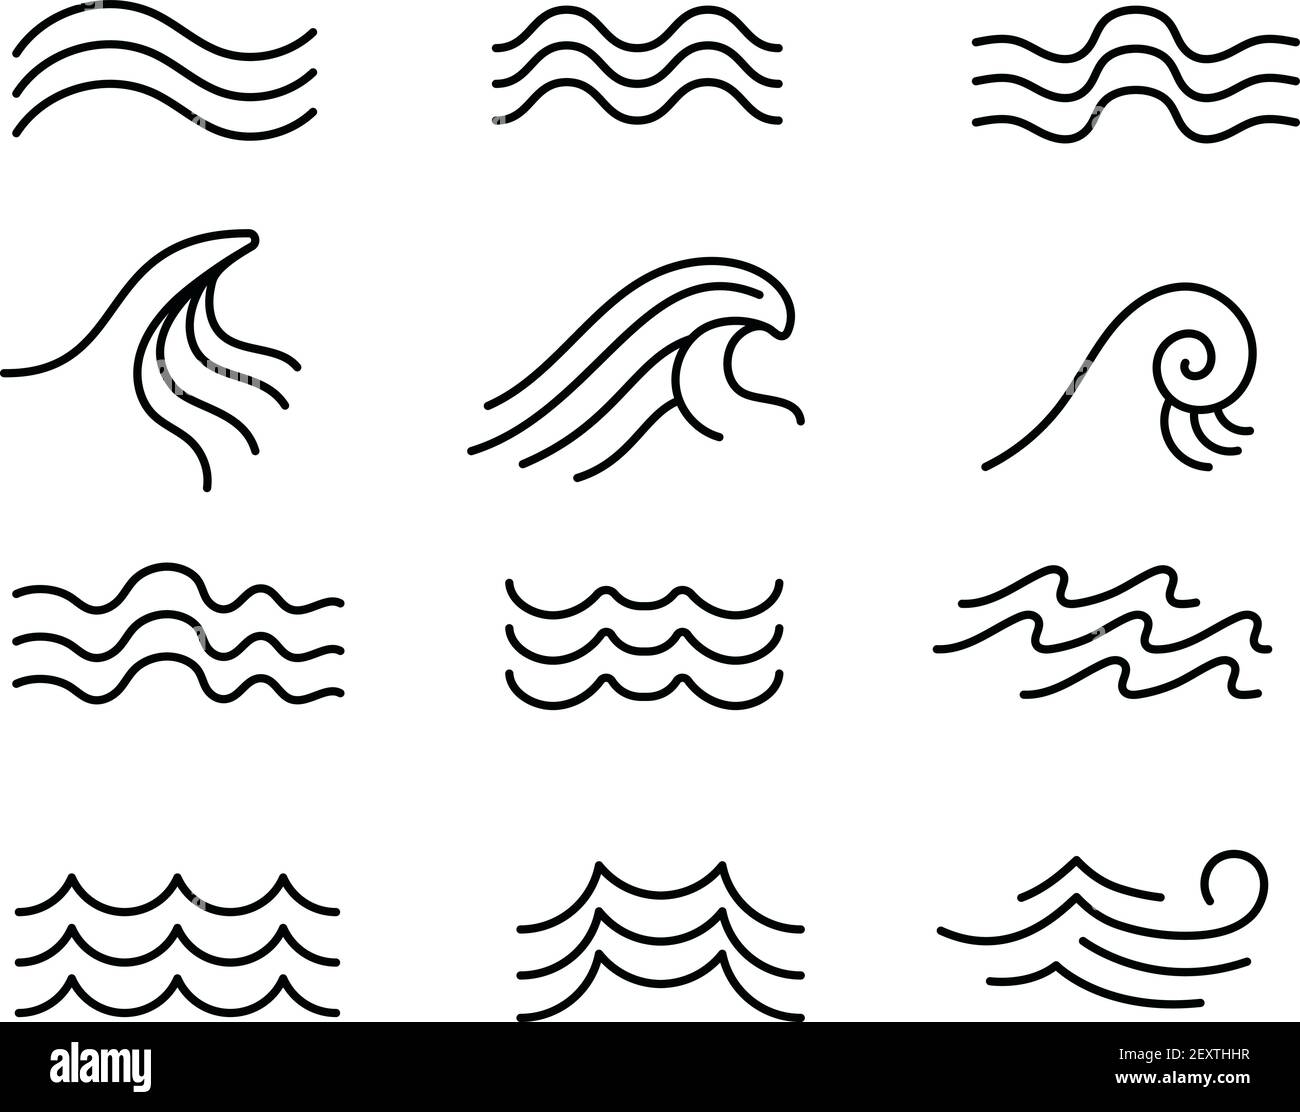 Line sea wave. Ocean water wavy elements, splashing blue storm waves isolated vector set. Sea storm water, ocean wave swirl, curve flow illustration Stock Vector